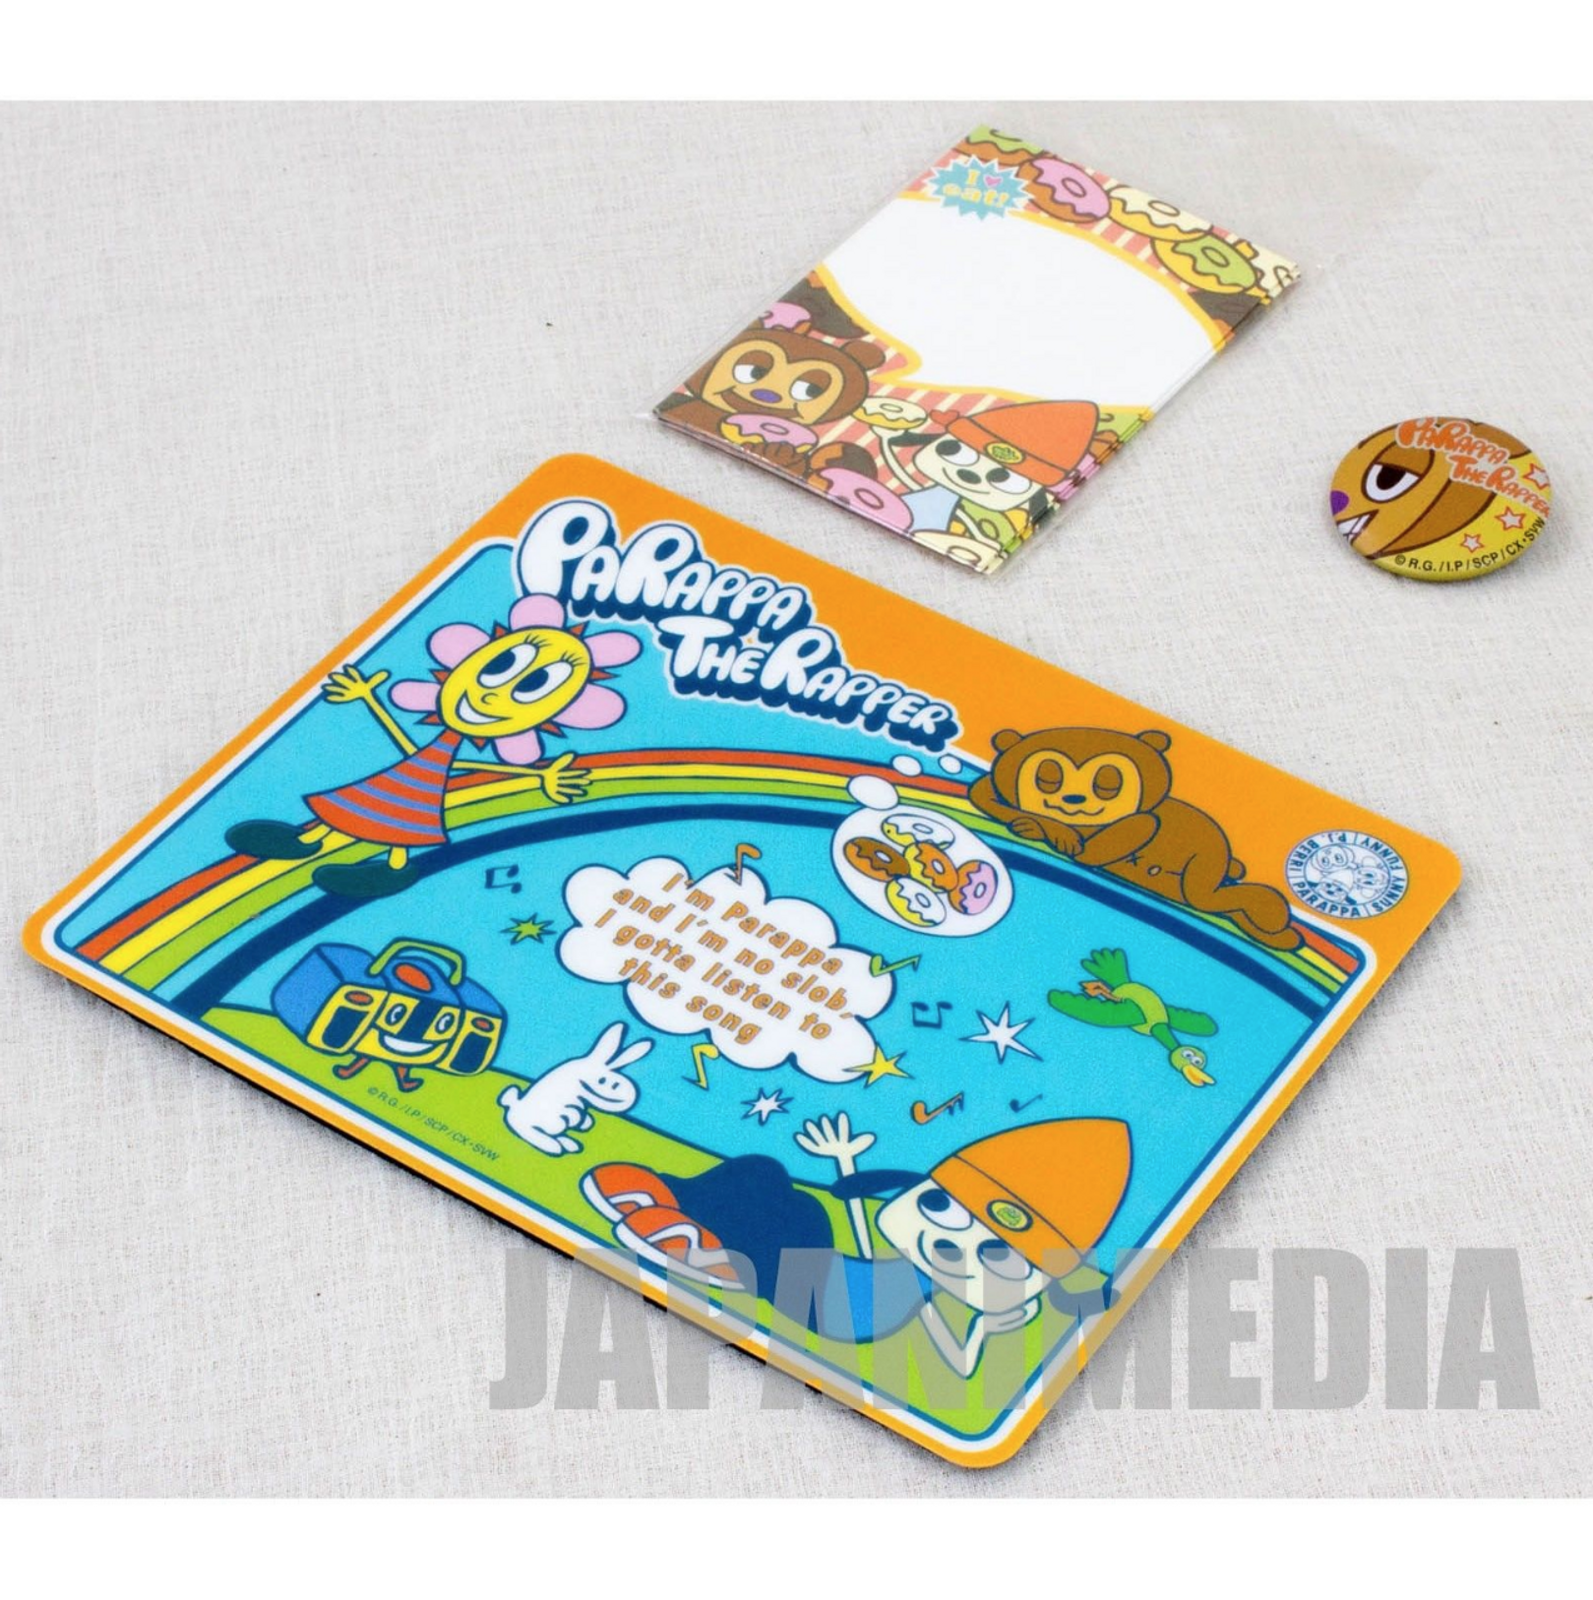 Parappa The Rapper Mouse pad PINS Mini Envelope Set JAPAN GAME